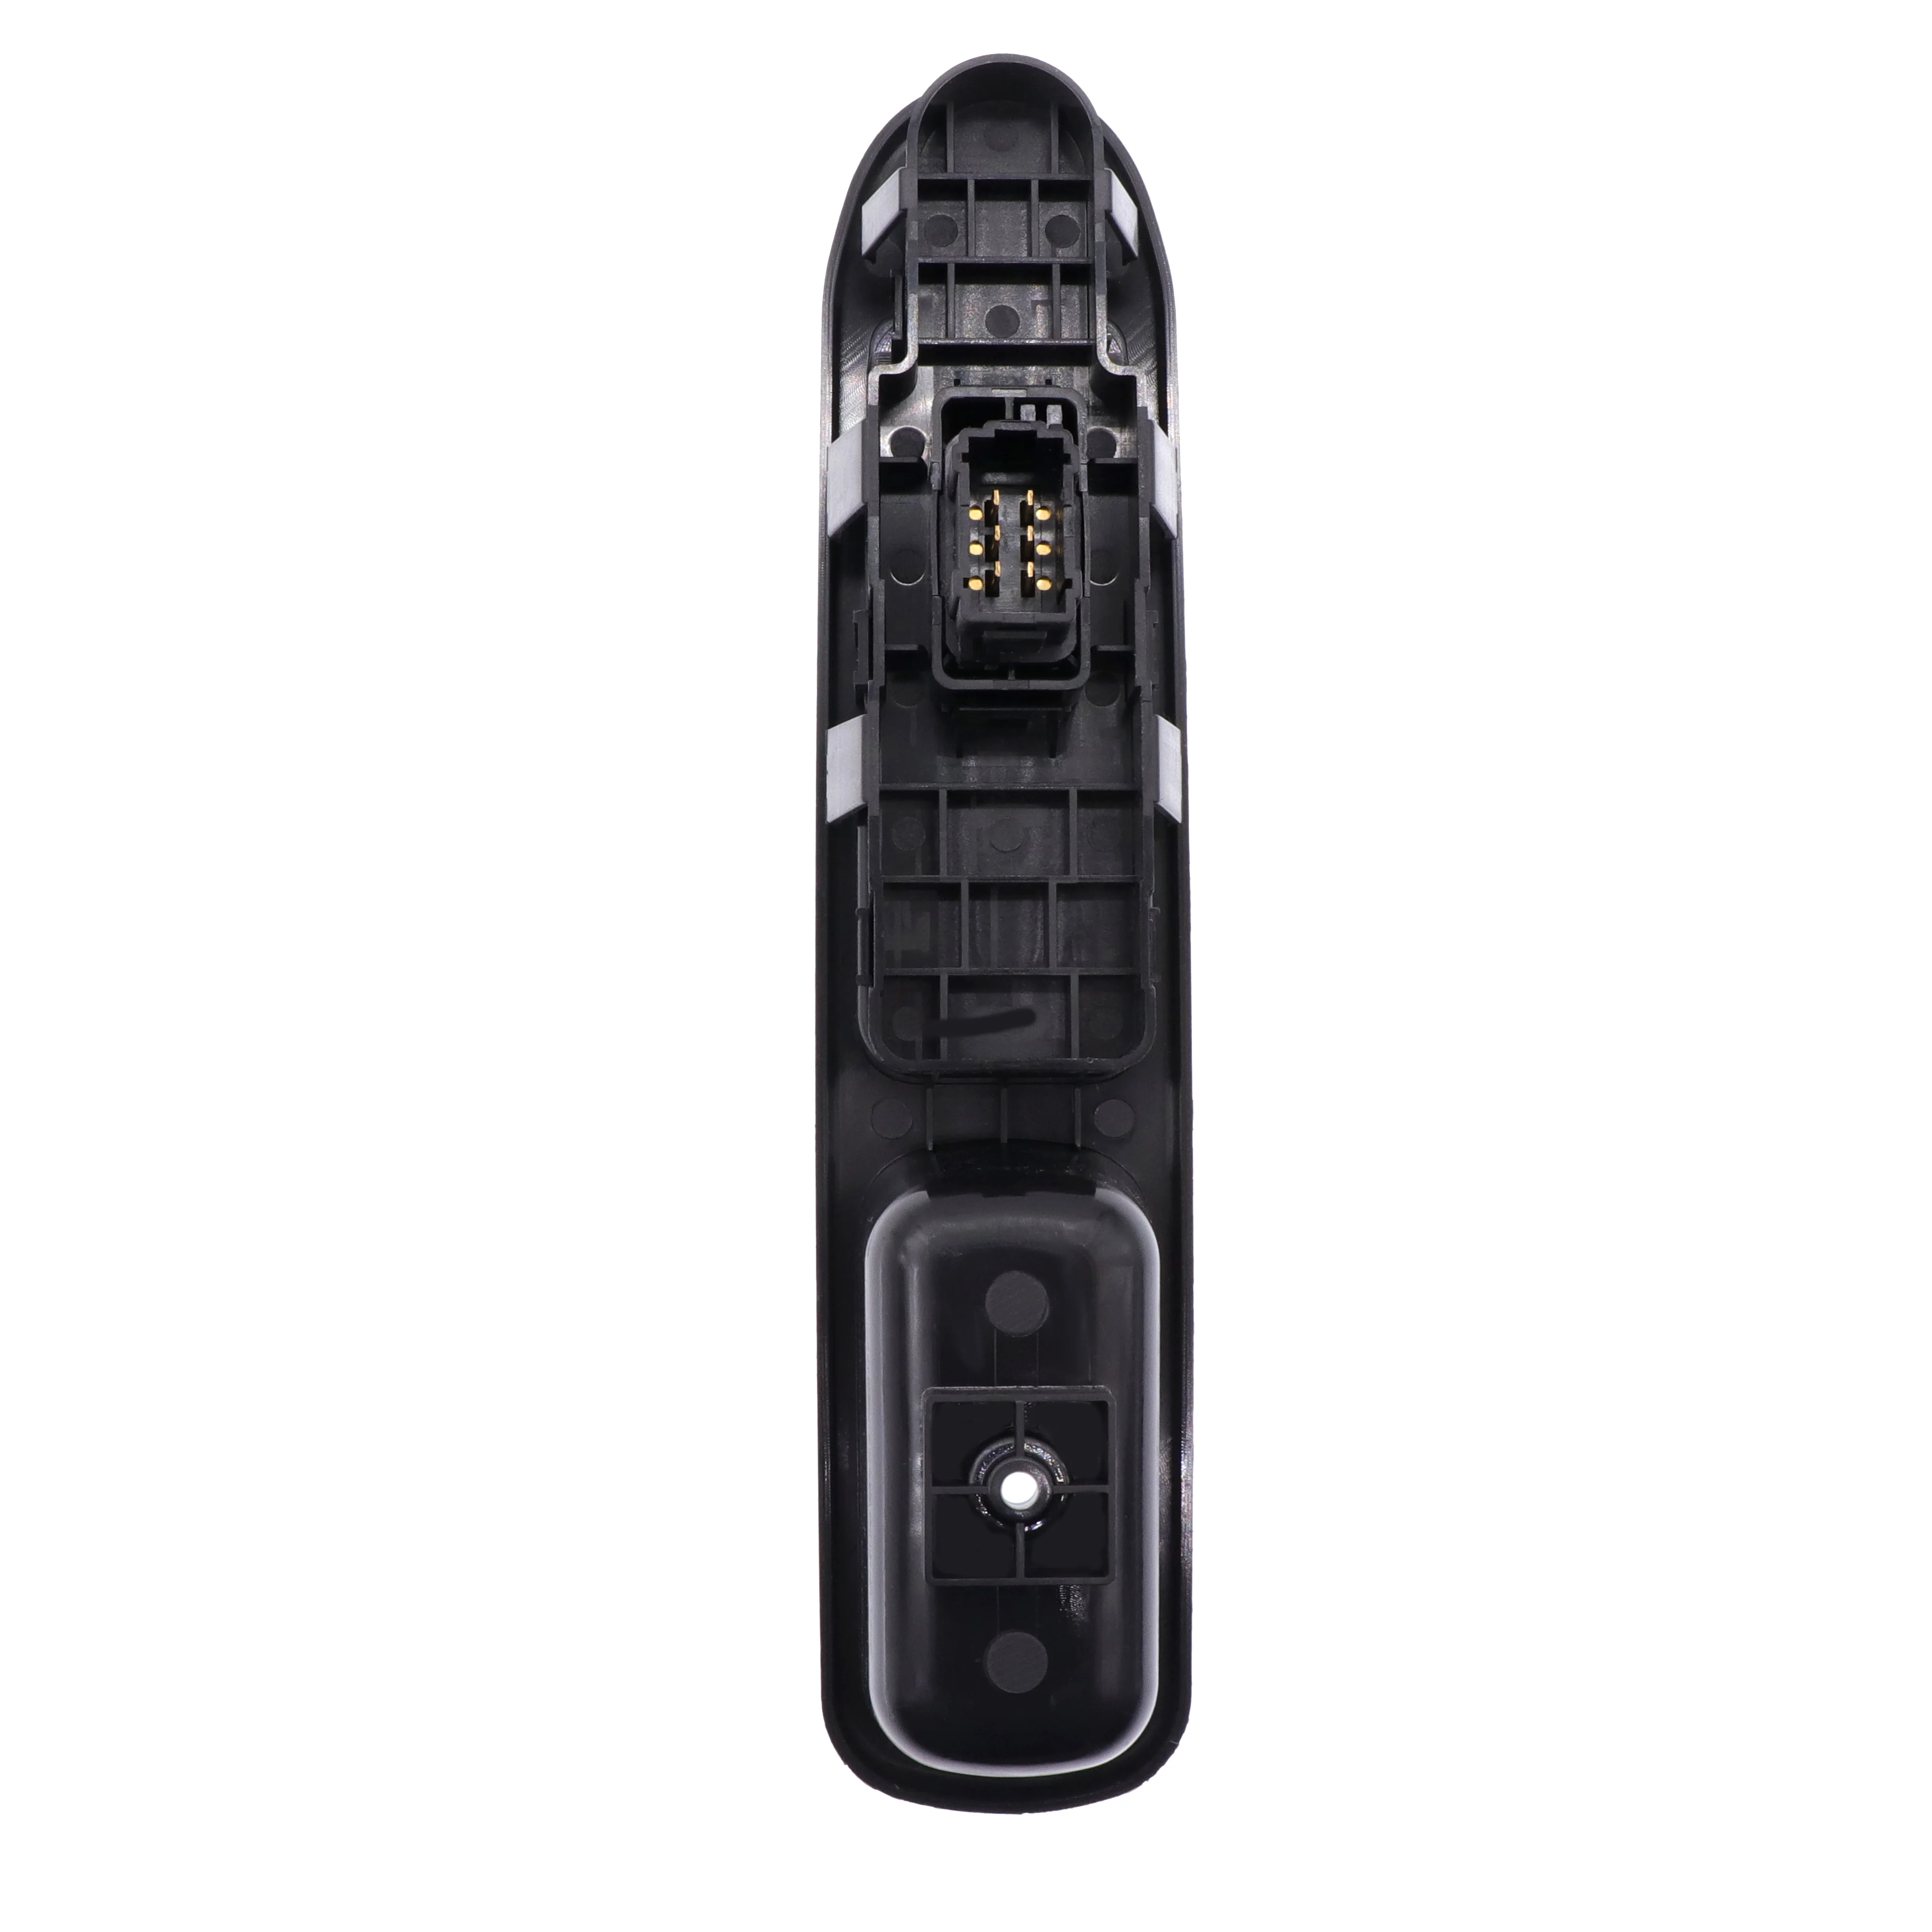 Shop Generic 6 Pins Window Control Switch For Peugeot 207 2007-2015  Passenger Side 6490.HQ 6554.HJ Online